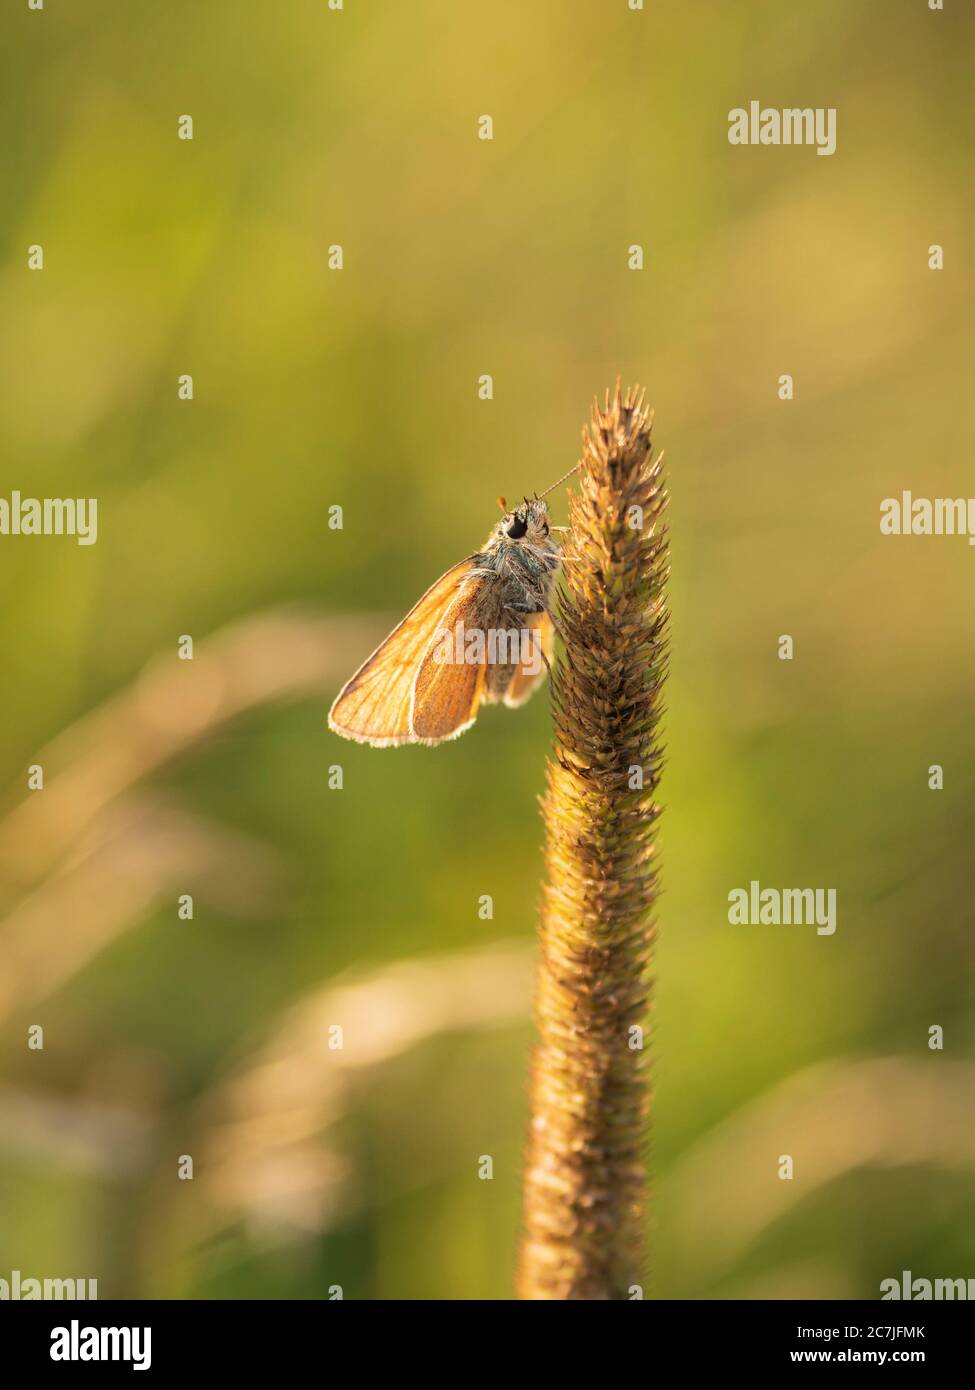 Insectes sur l'herbe, Großer Filz / Klosterfilz, Parc National, Bavarois forêt, Bavière, Allemagne Banque D'Images